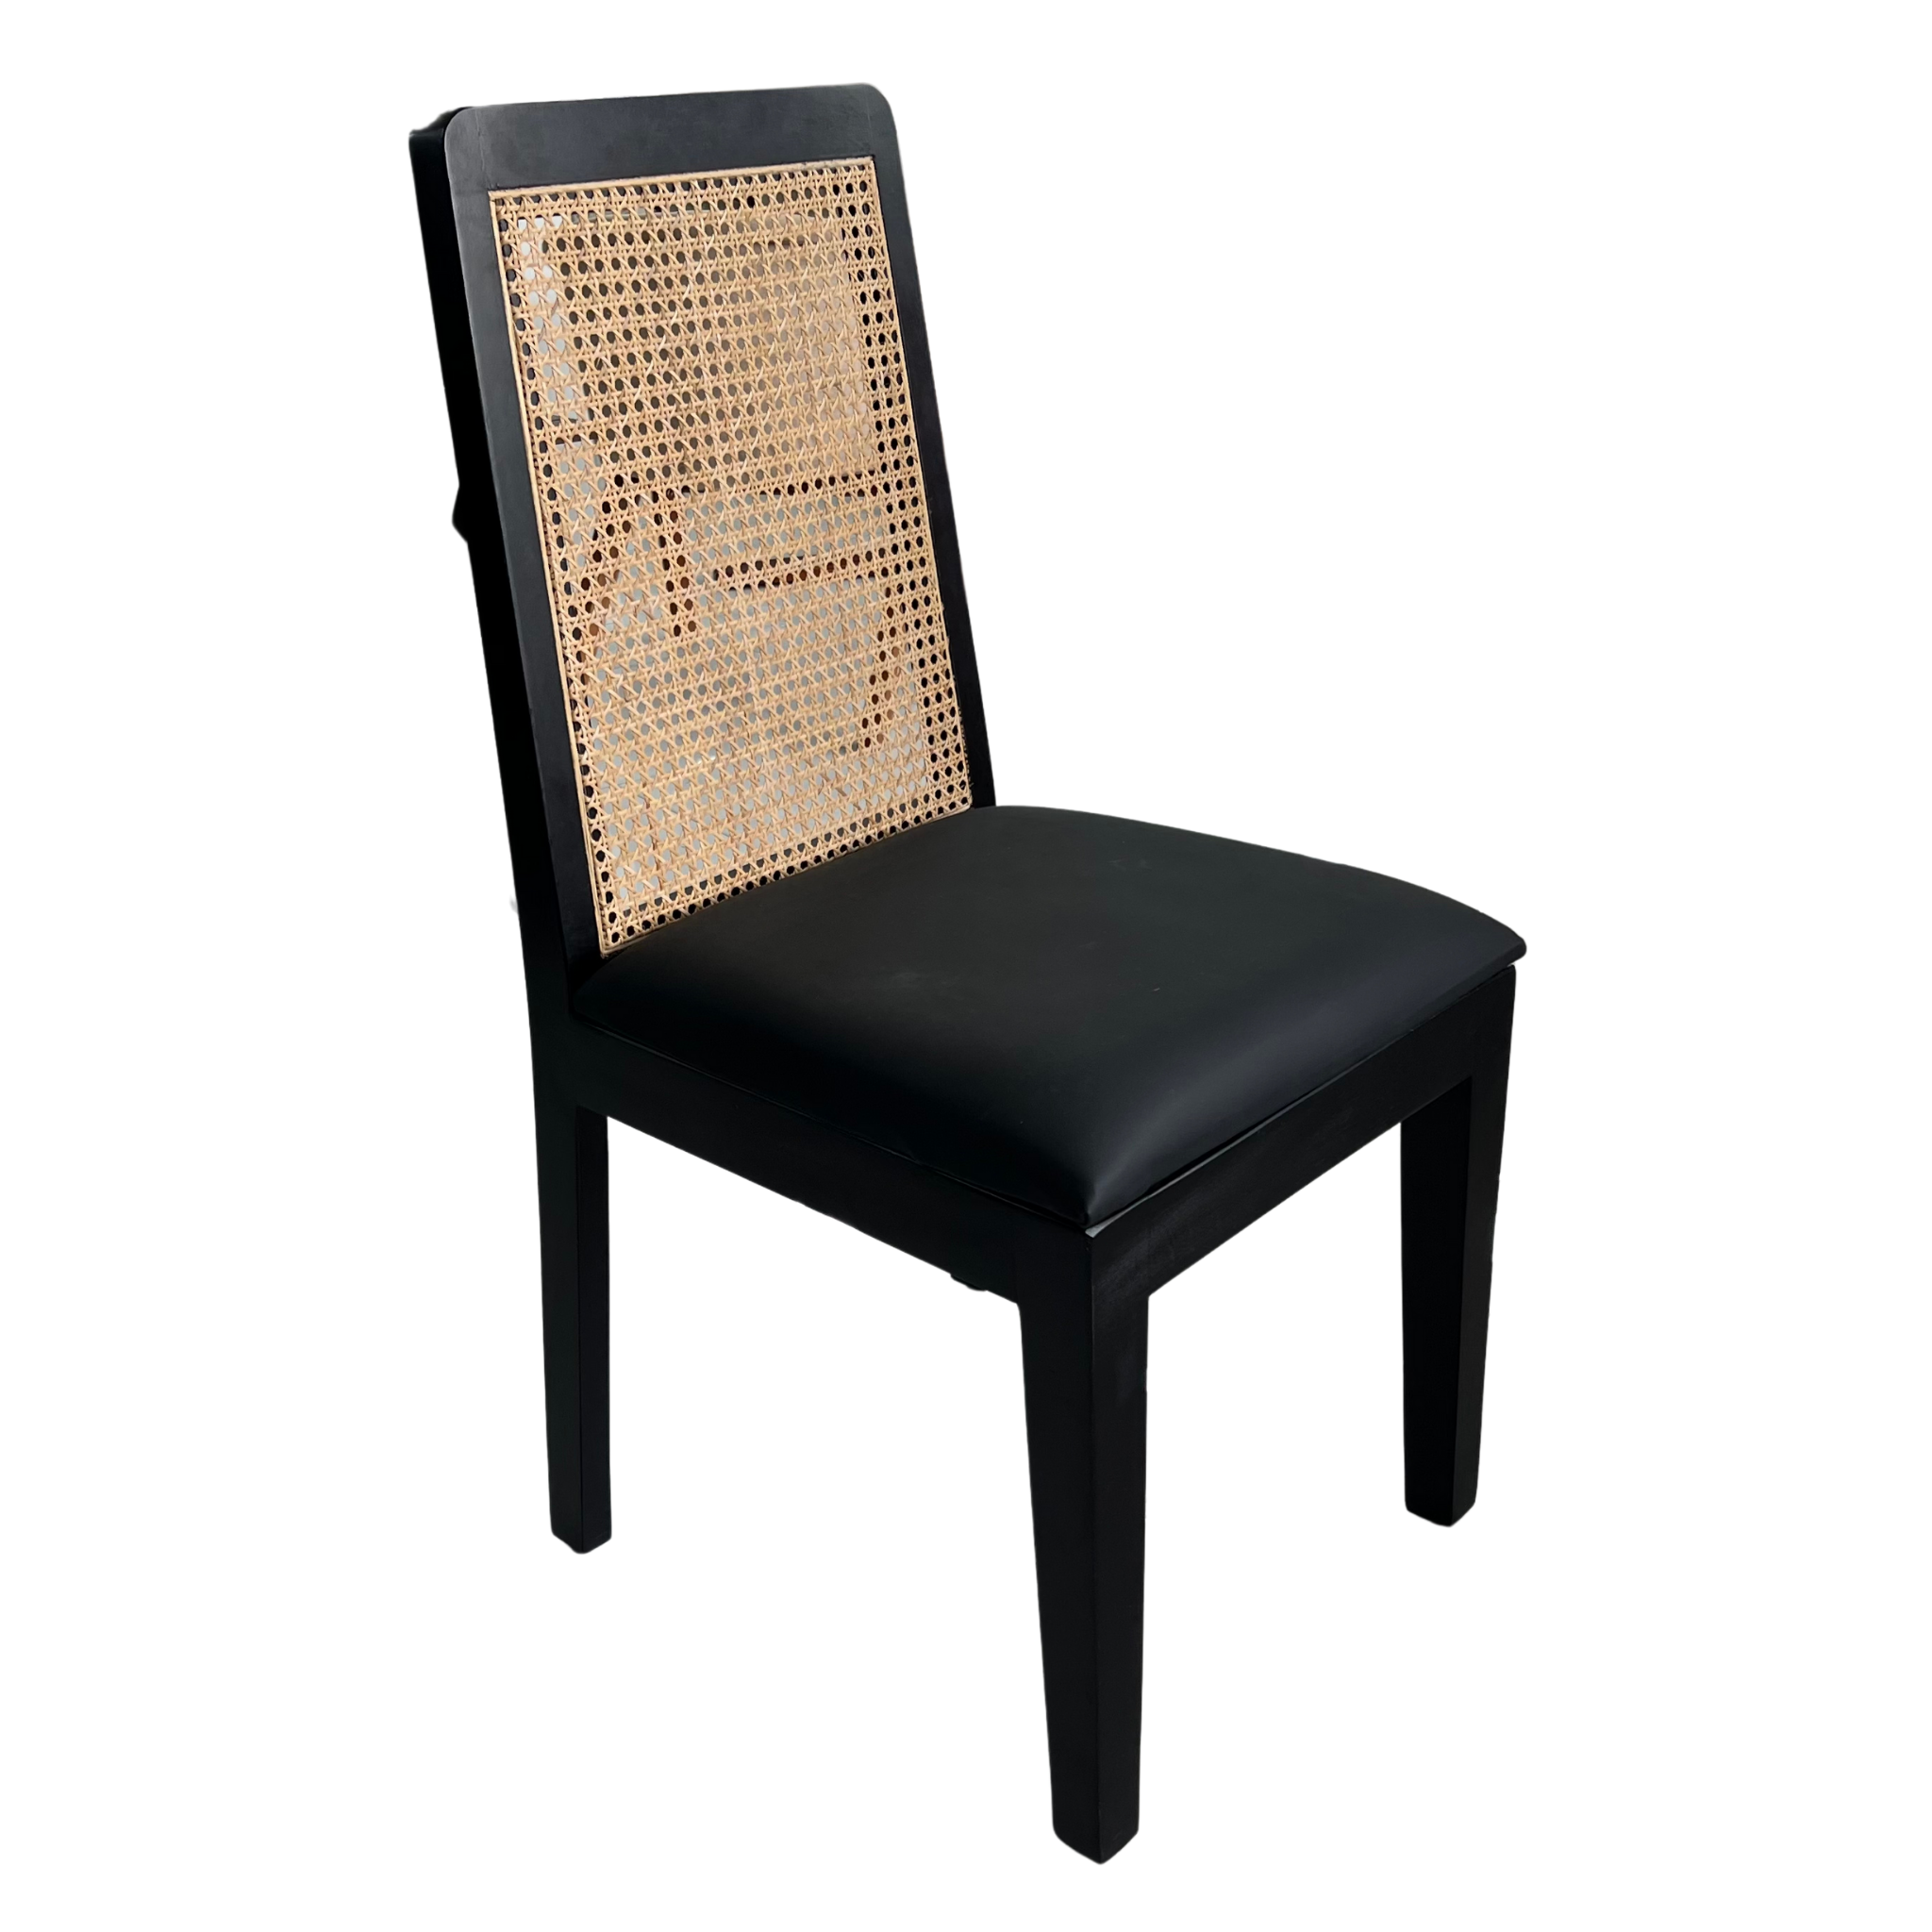 Altana Black Cane Chair